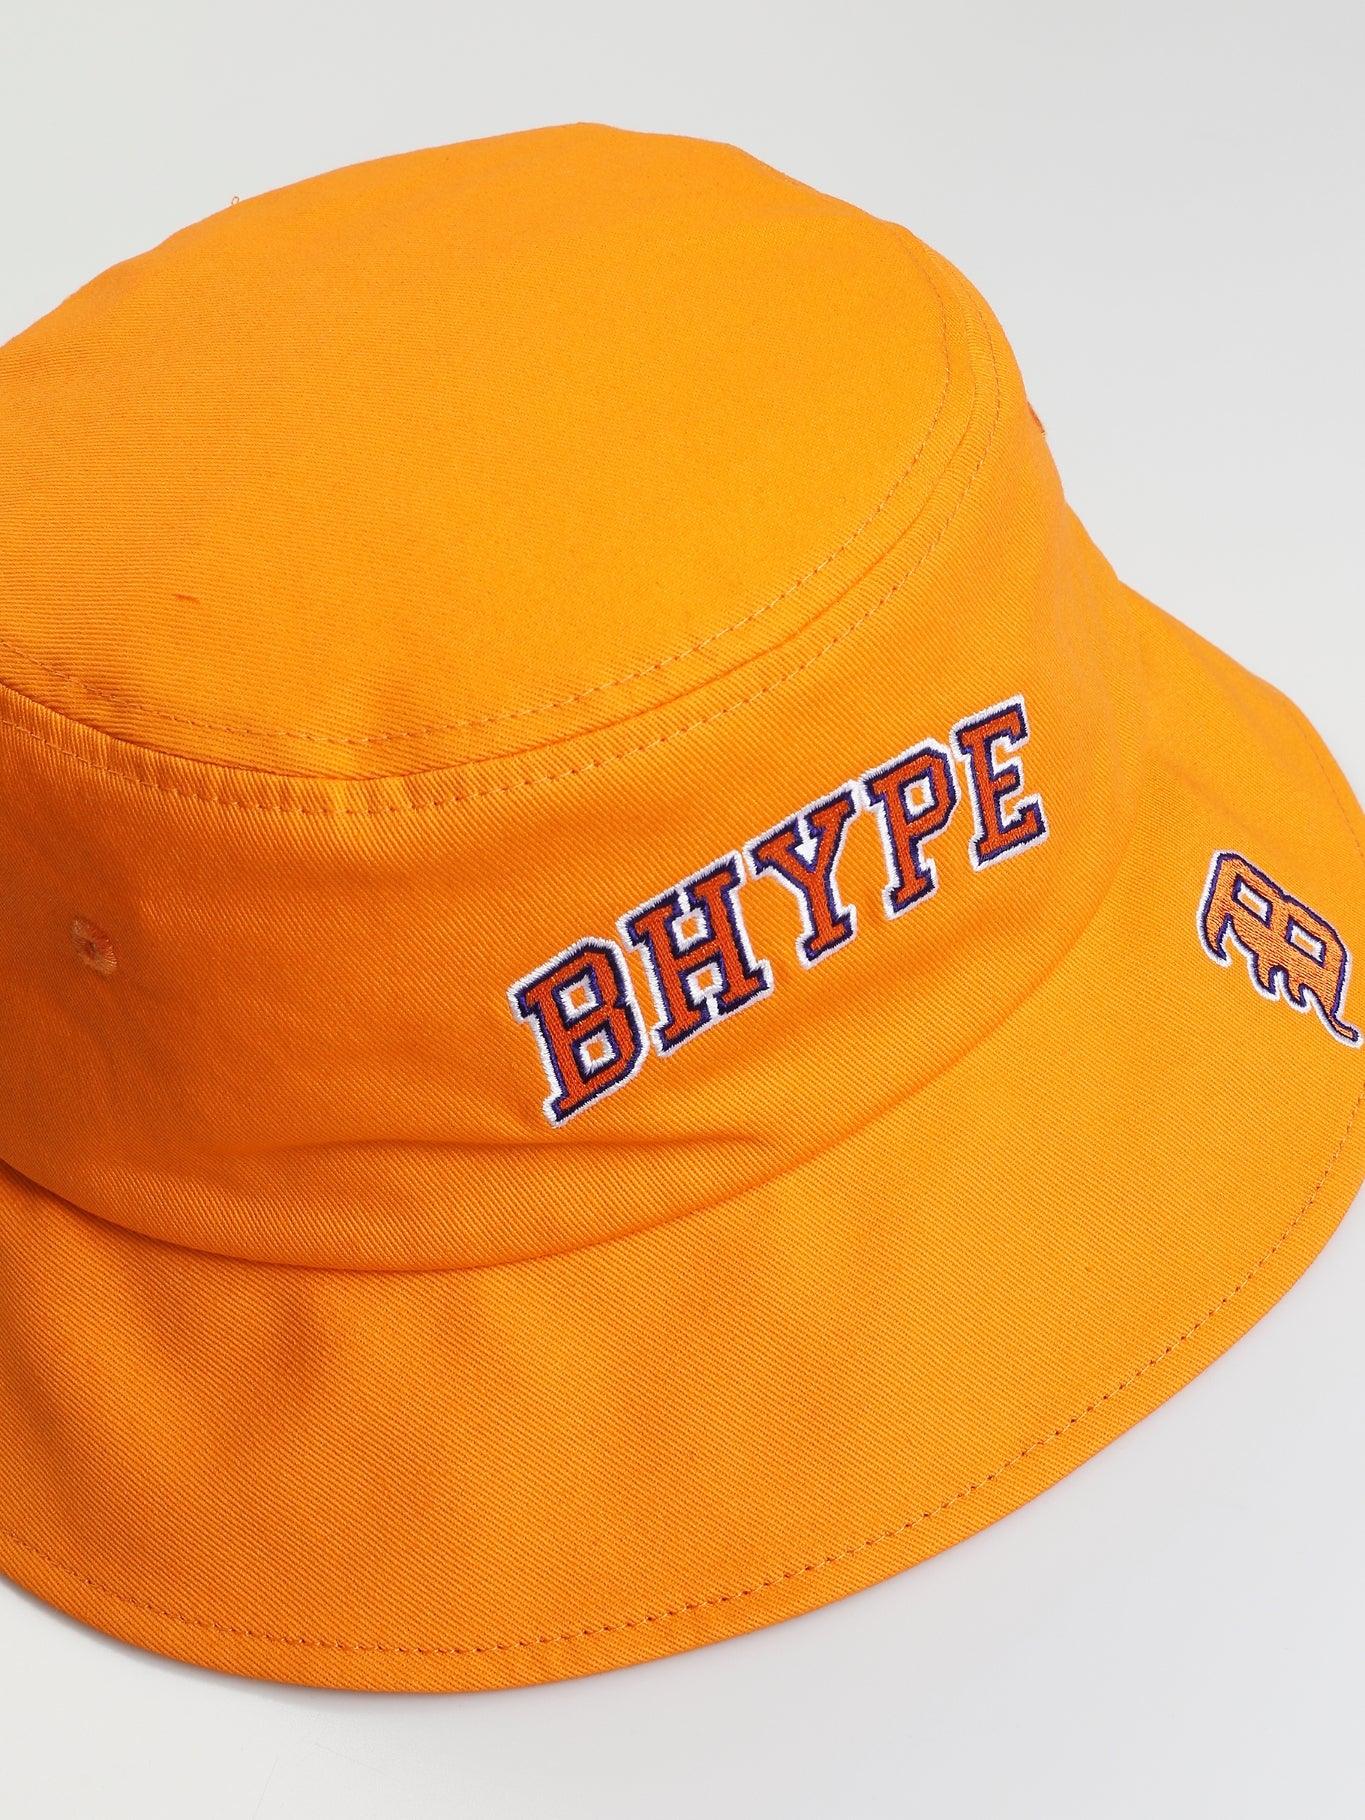 BHYPE ORANGE BUCKET HAT - B-Hype Society